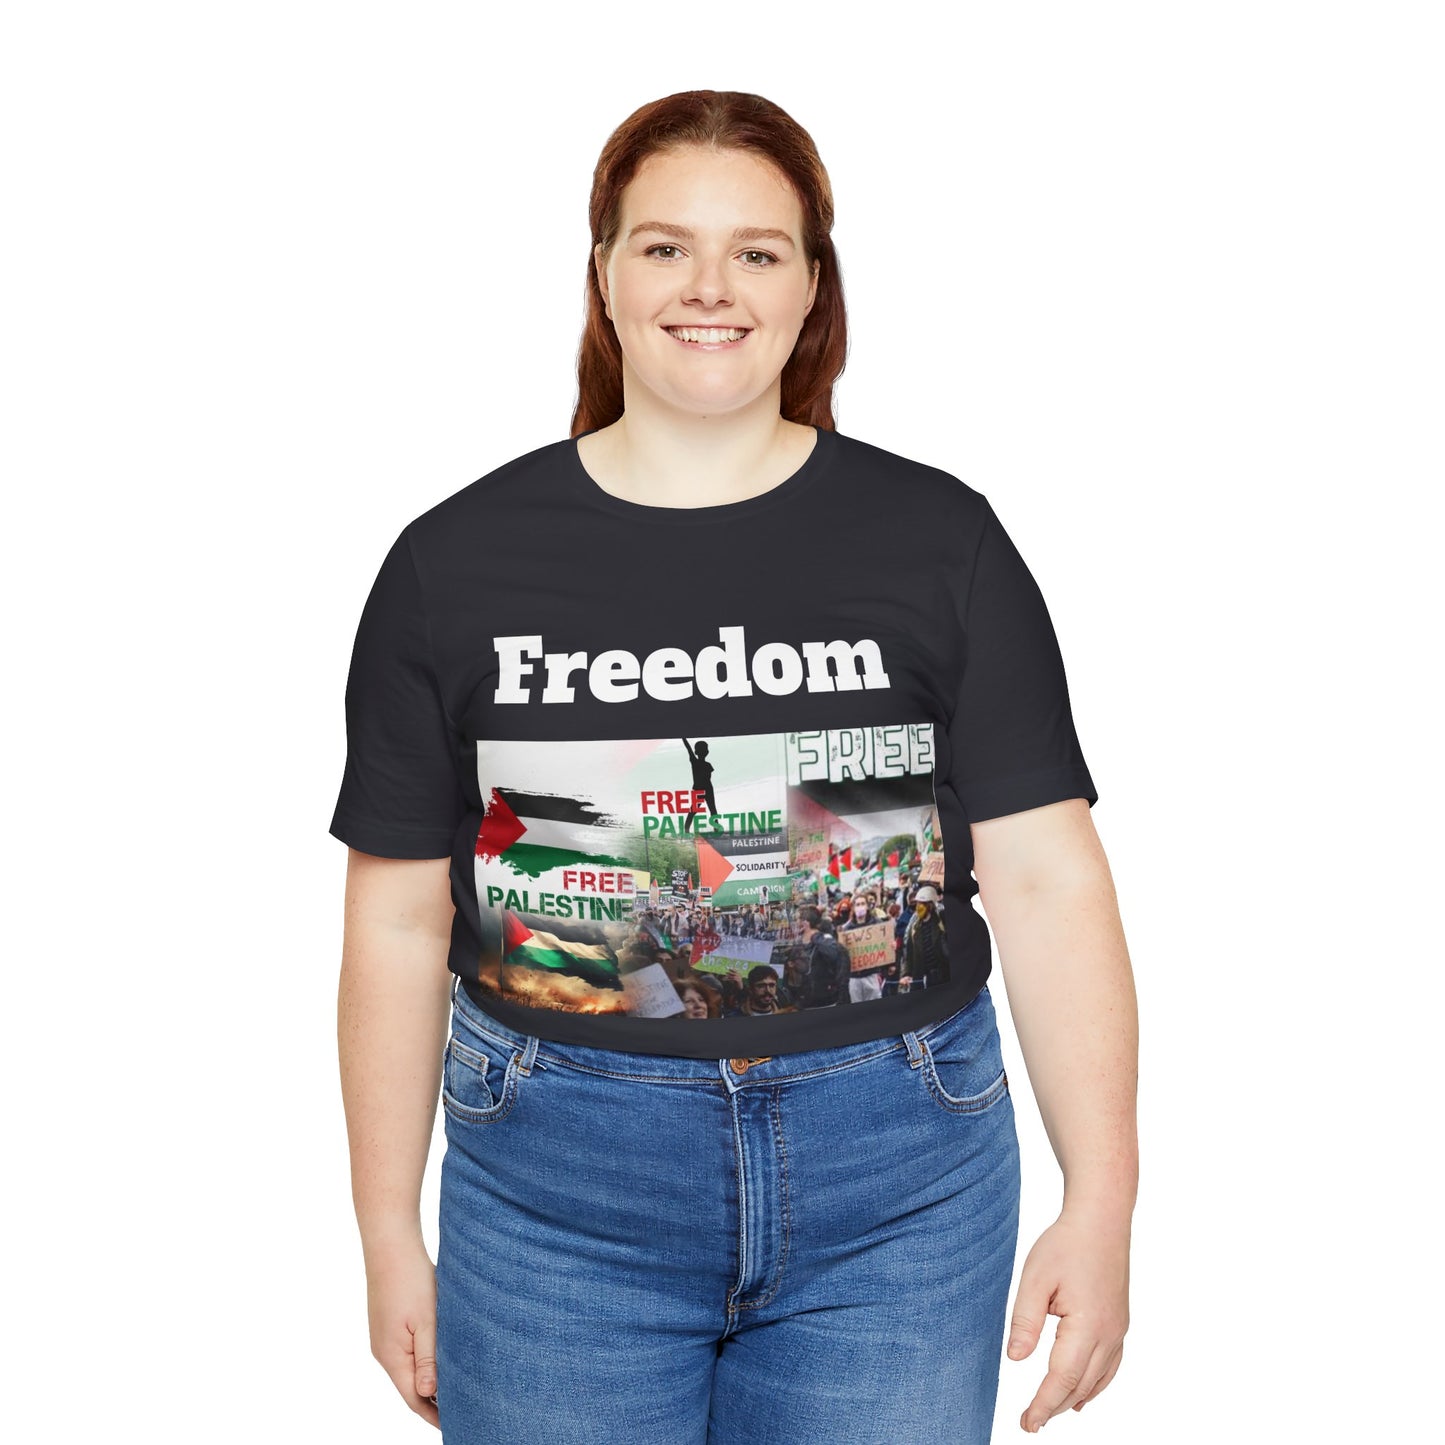 "Free Palestine" printed on a T-shirt